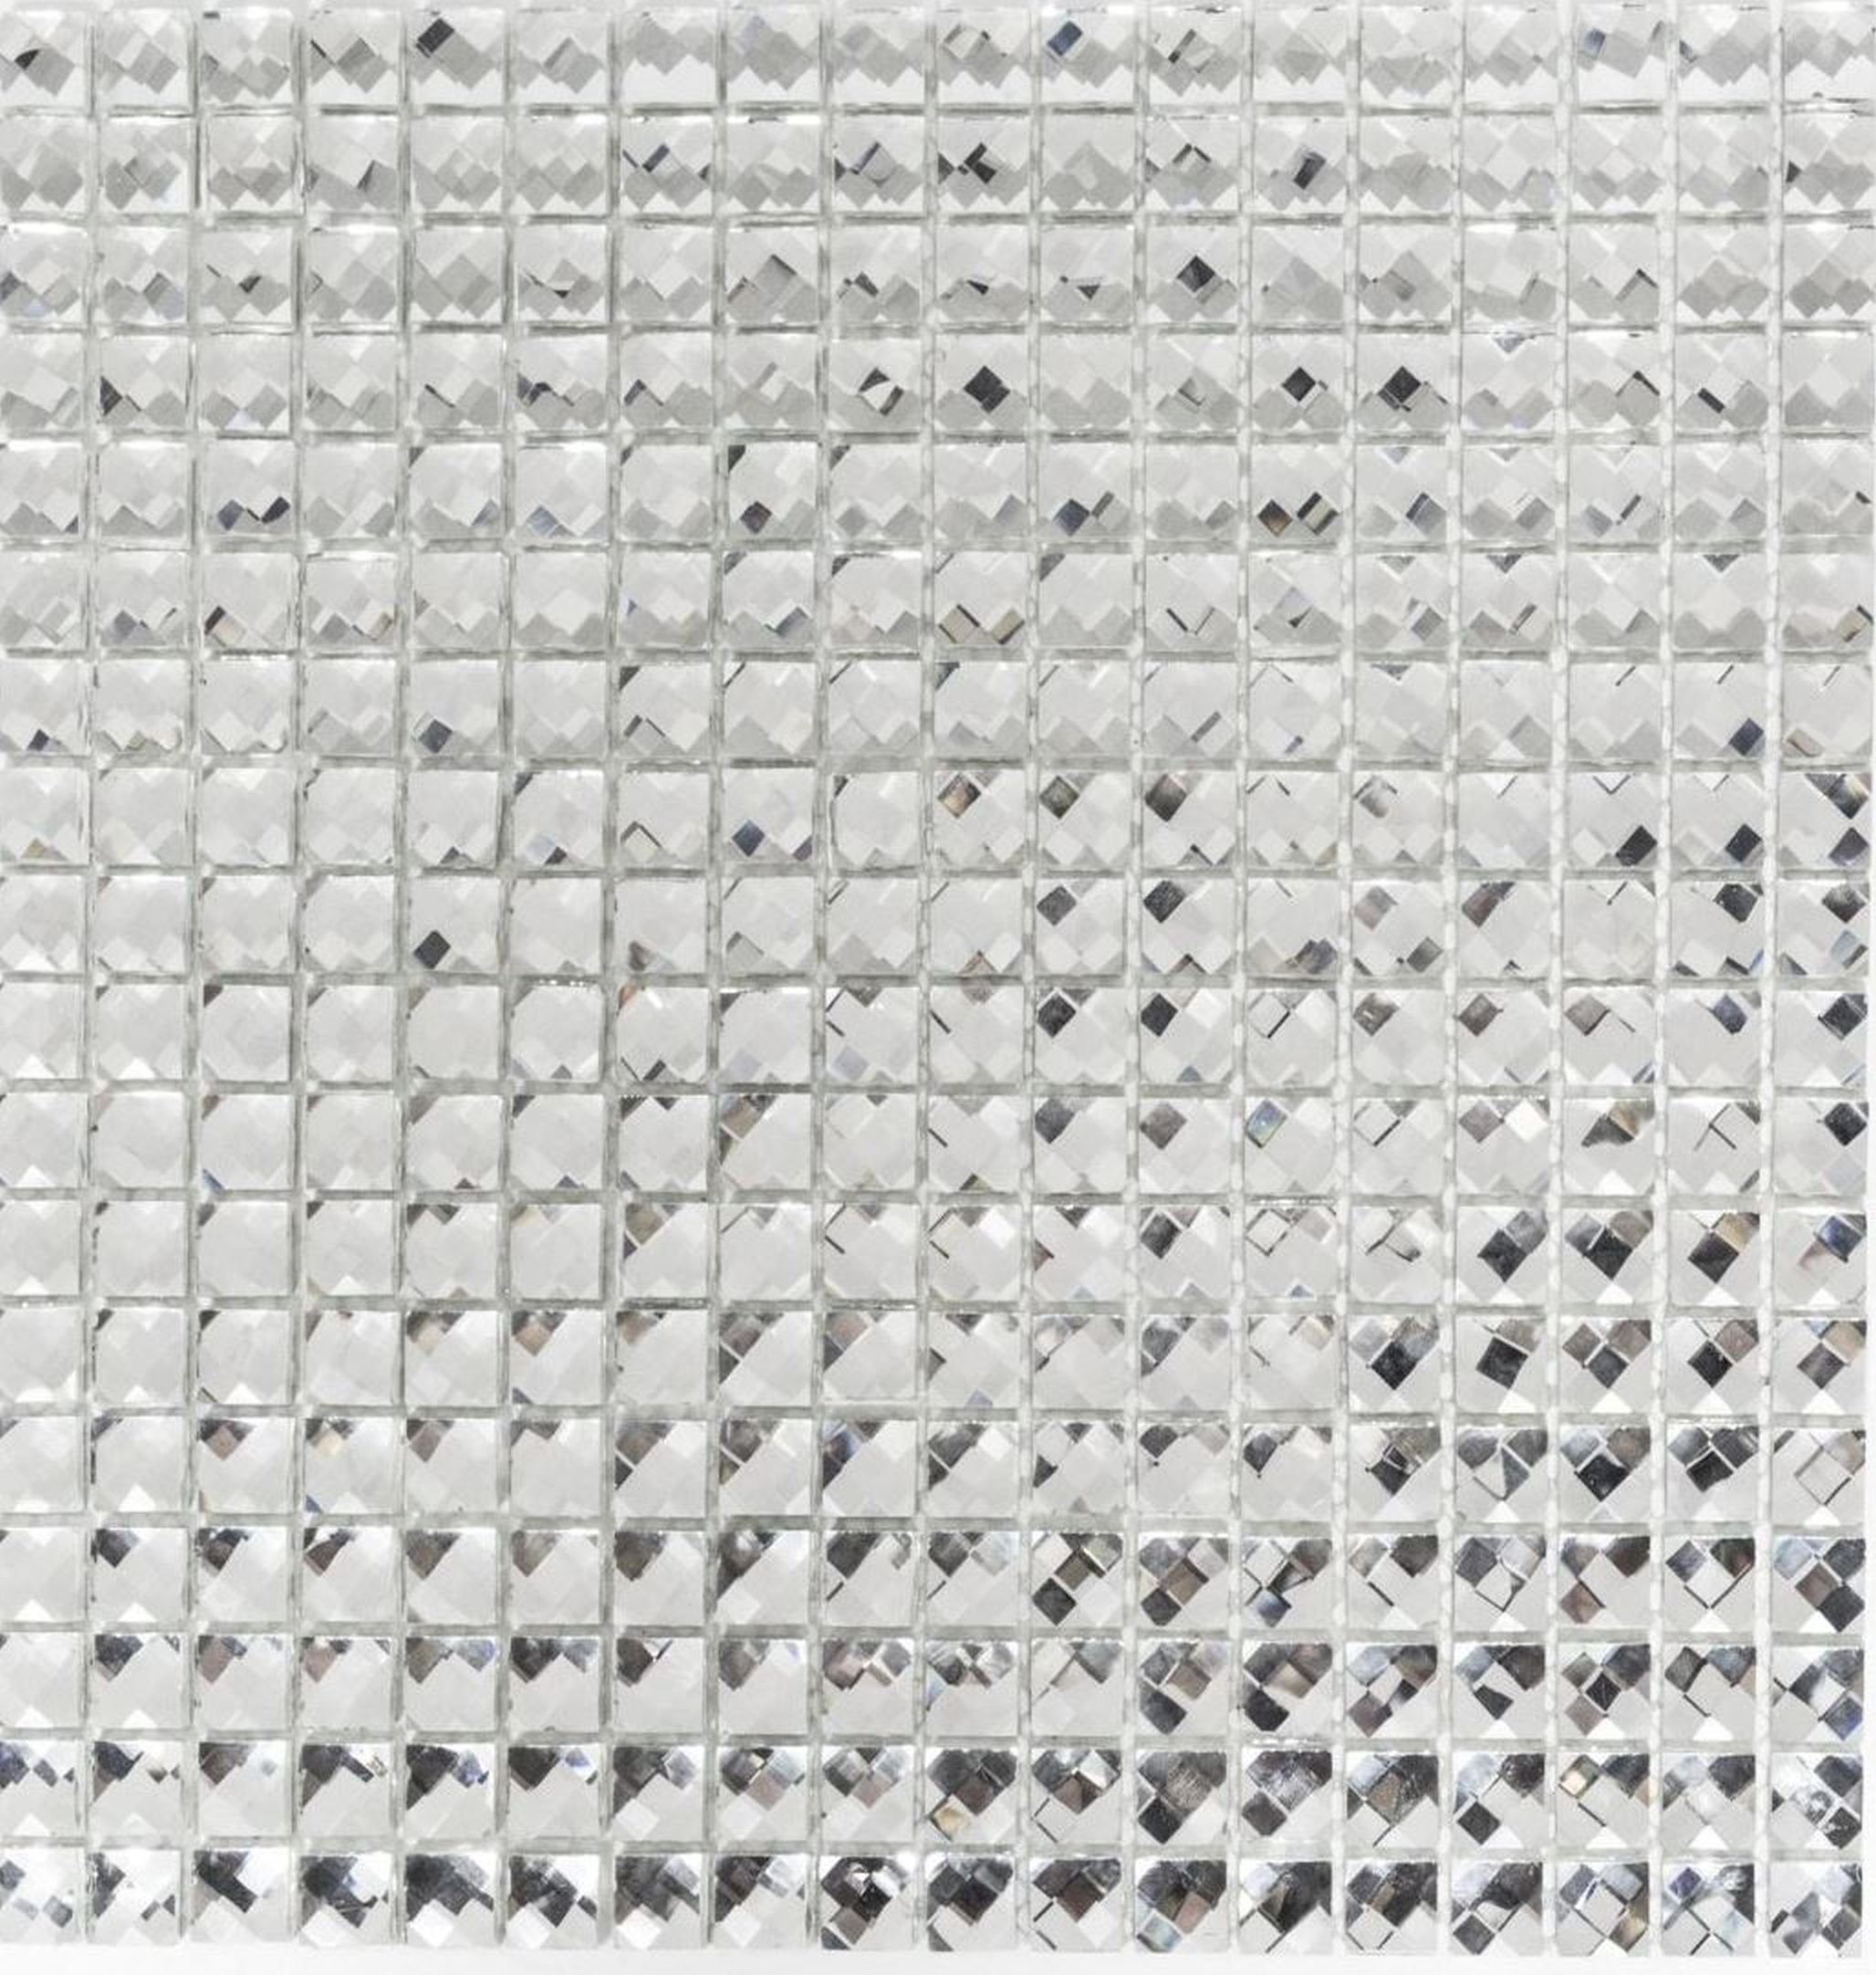 Mosani Mosaikfliesen Glasmosaik Diamant Optik Mosaikfliese silber Fliesenspiegel Küche